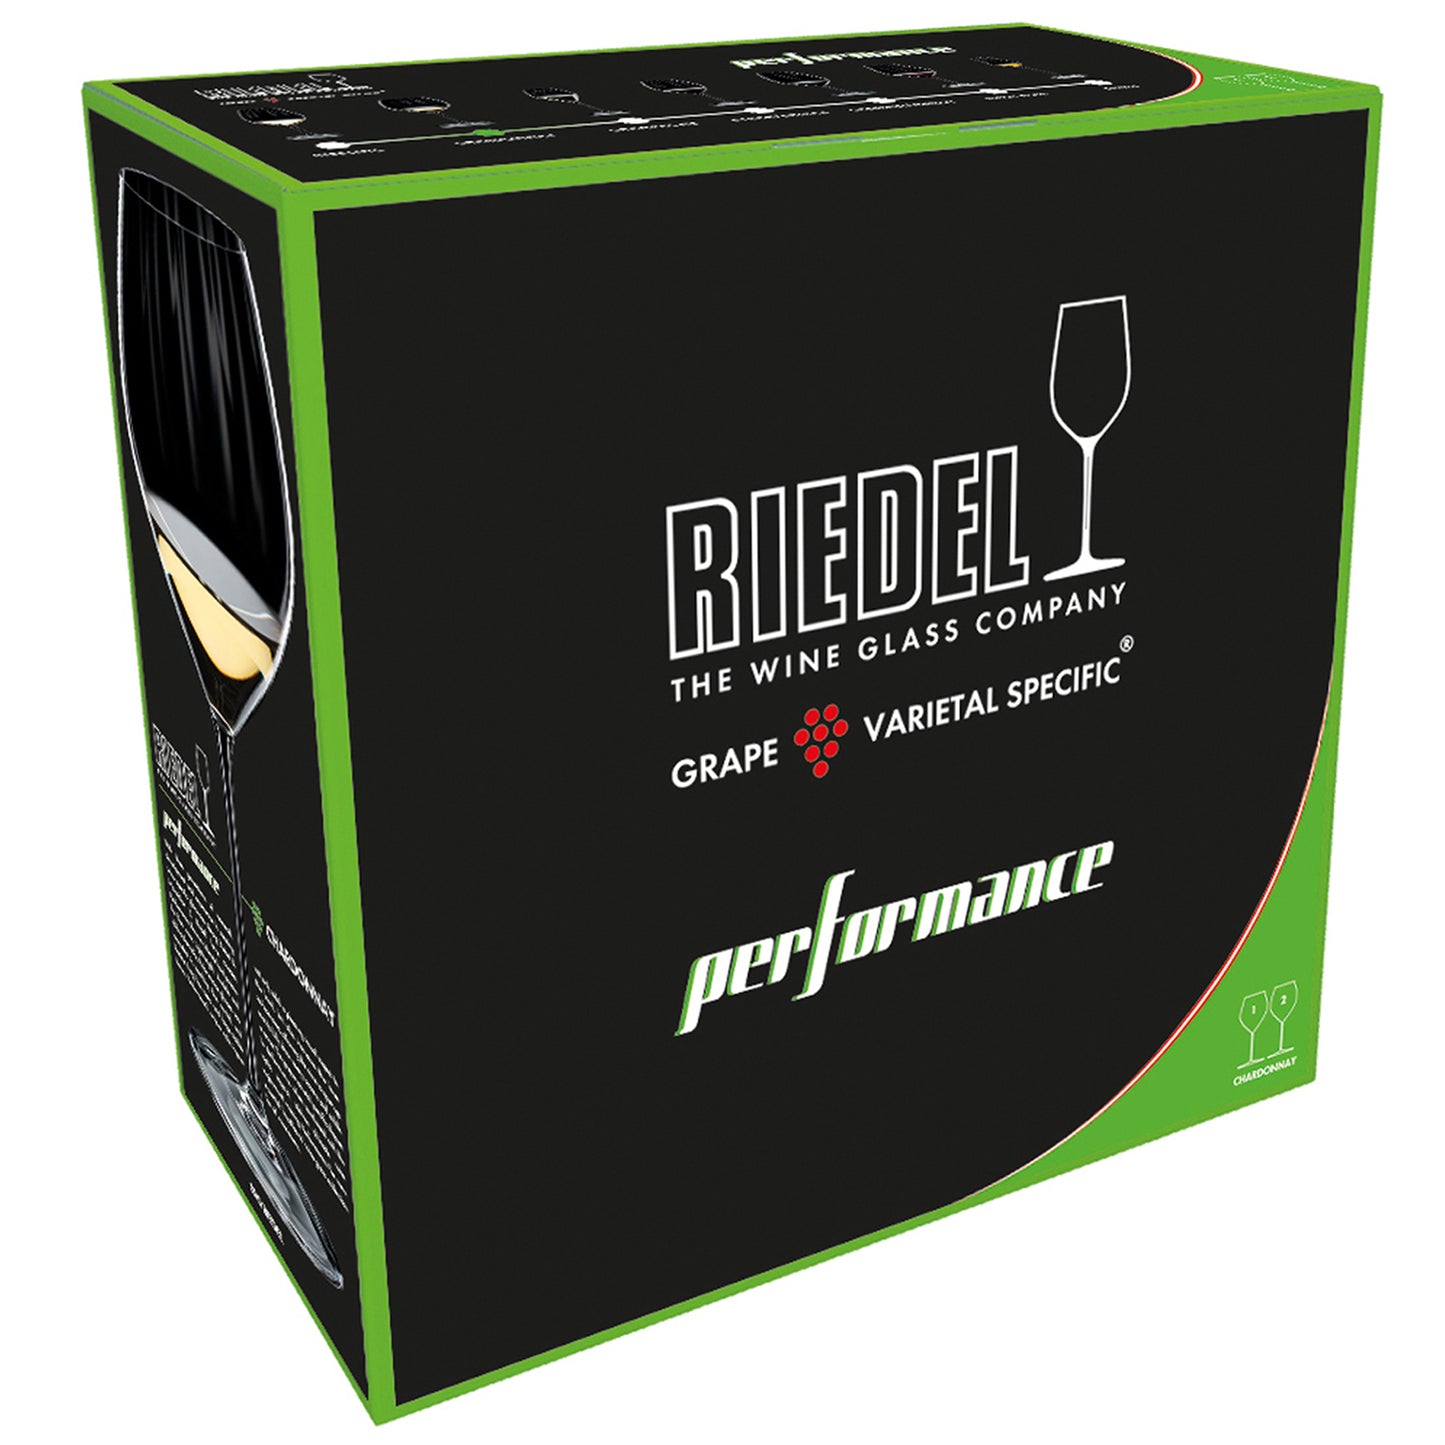 Chardonnay wine case and Glasses bundle